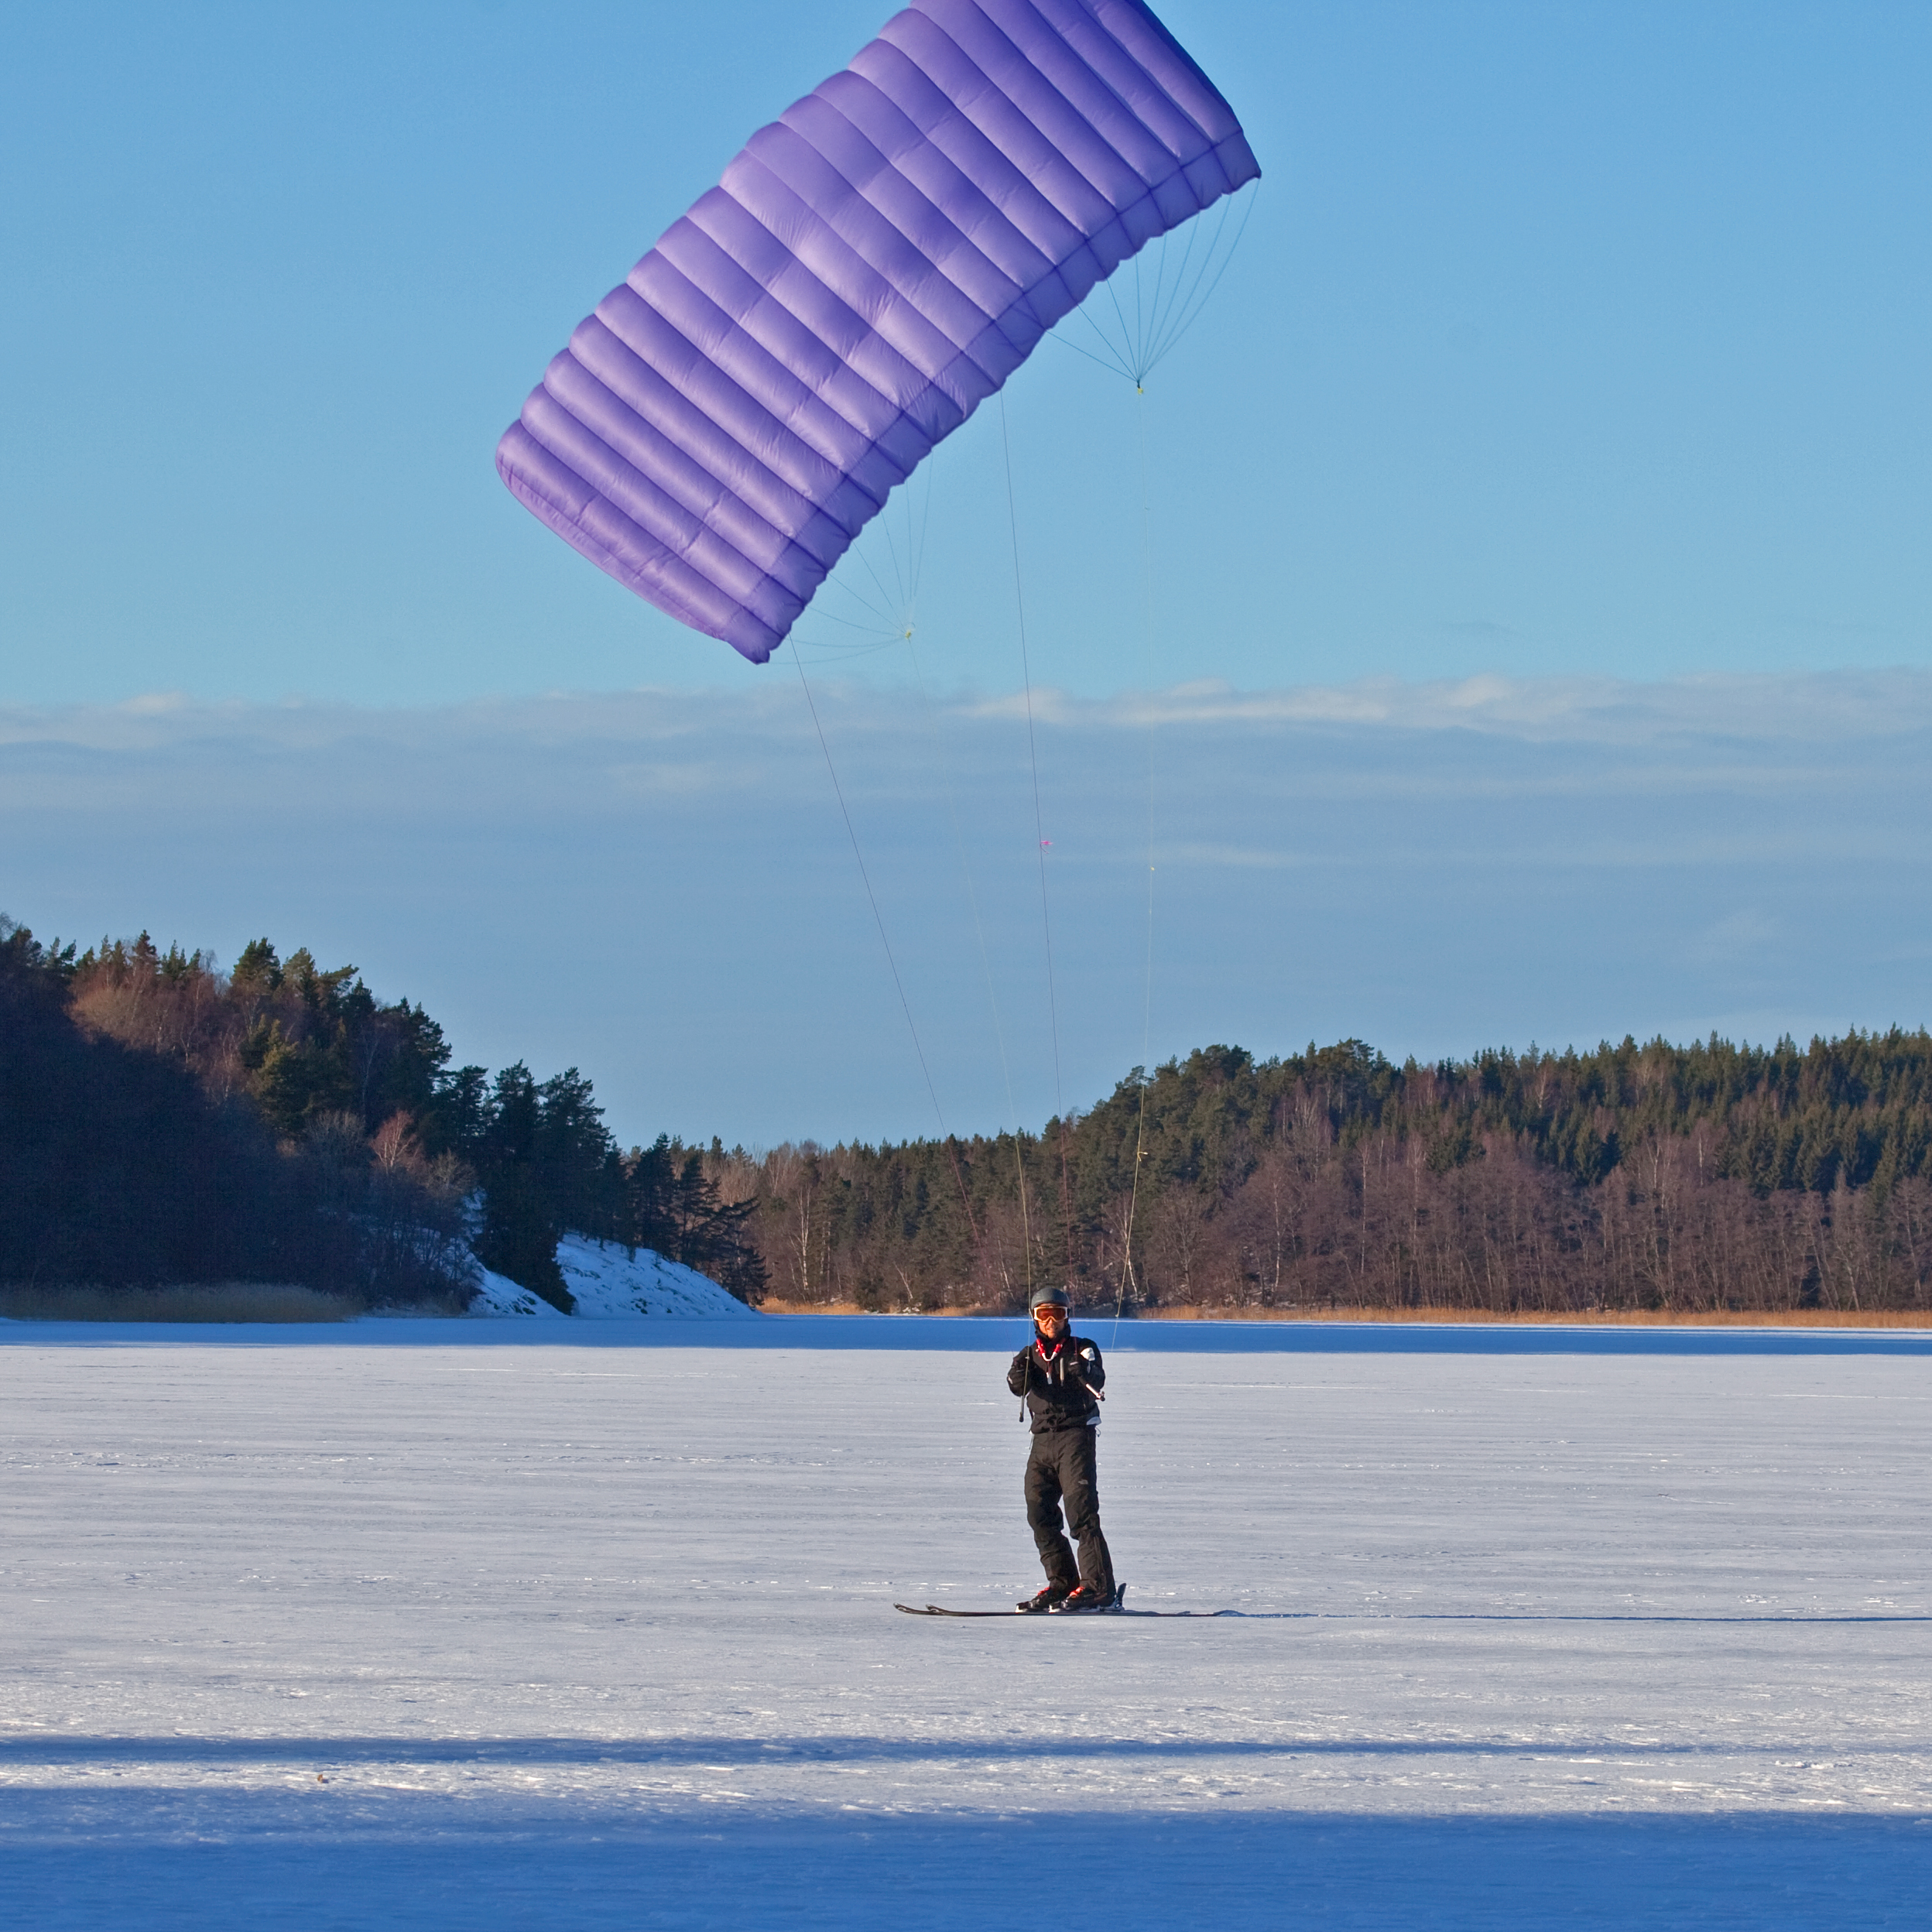 Kite skiing on ice, 29 January 2011 in Broknas, Vaxholm, Stockholm